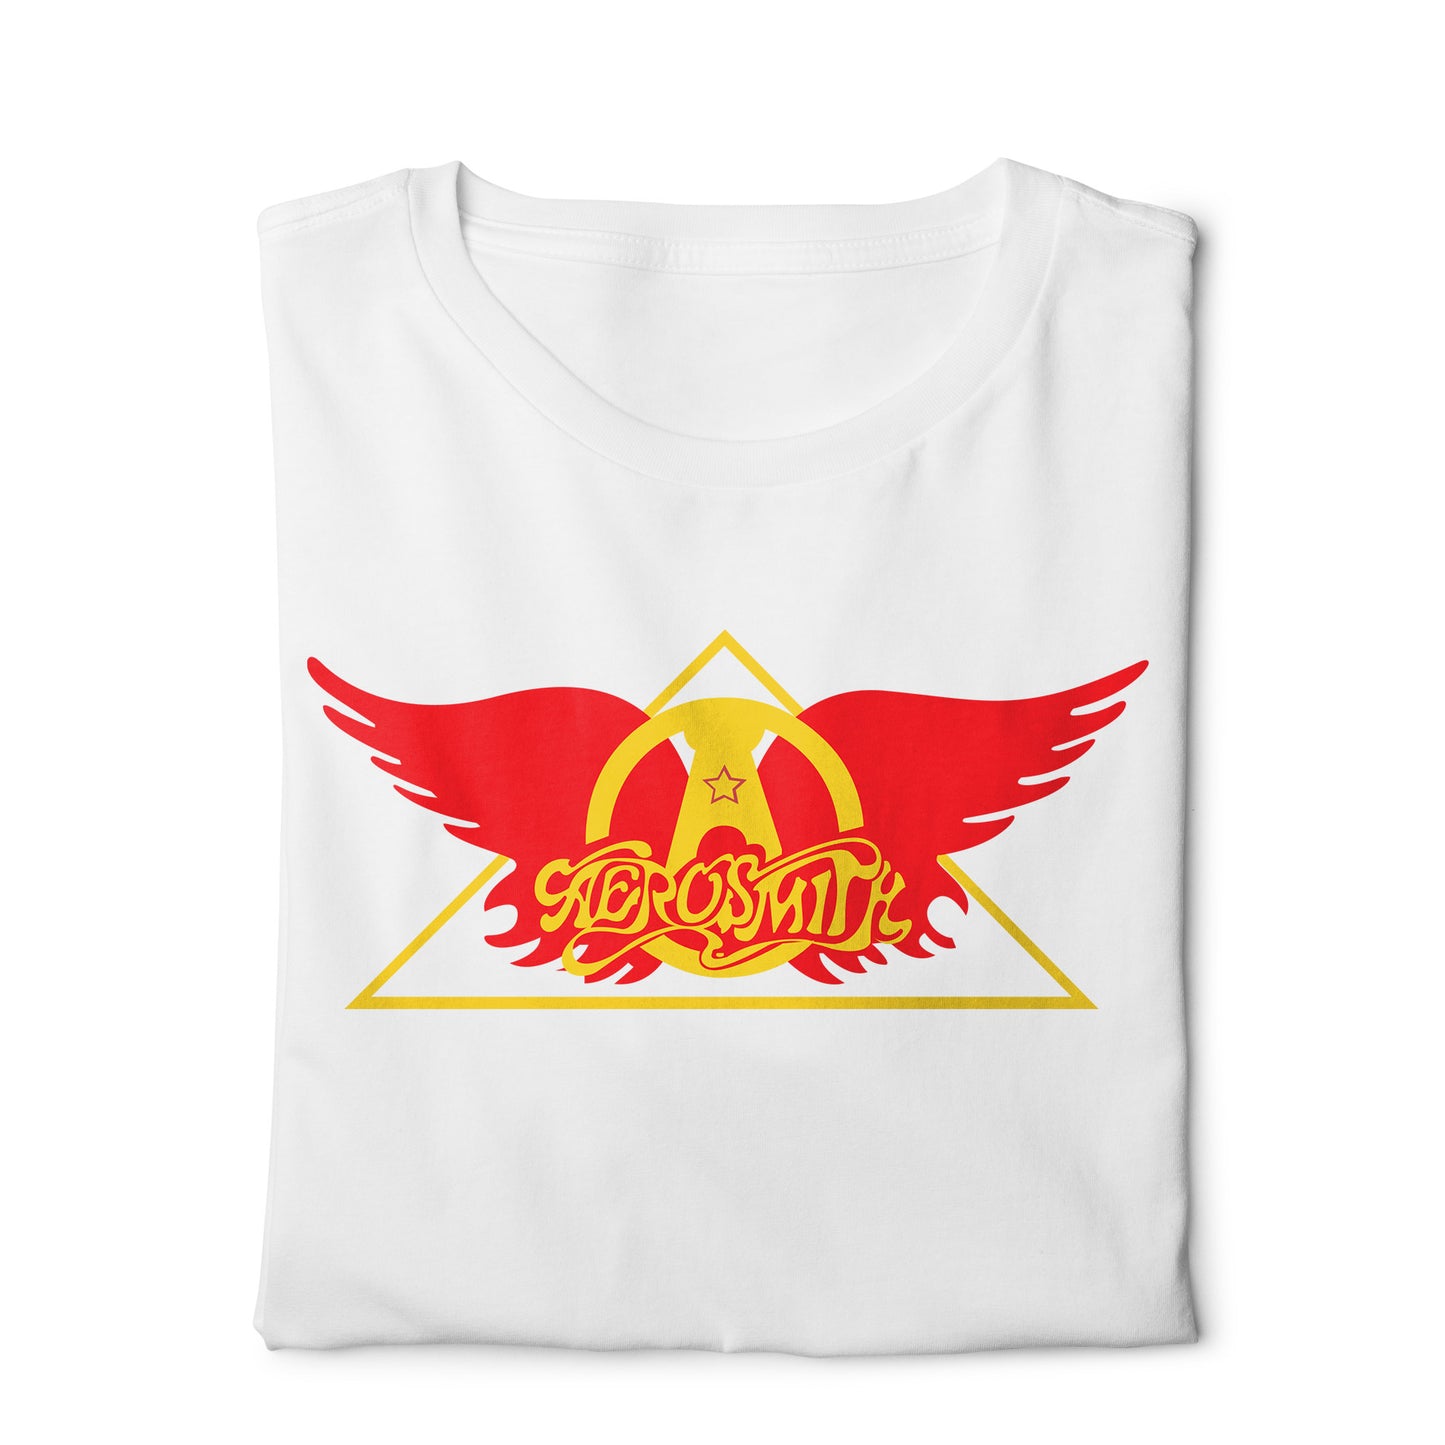 Aerosmith - Digital Graphics Basic T-shirt White